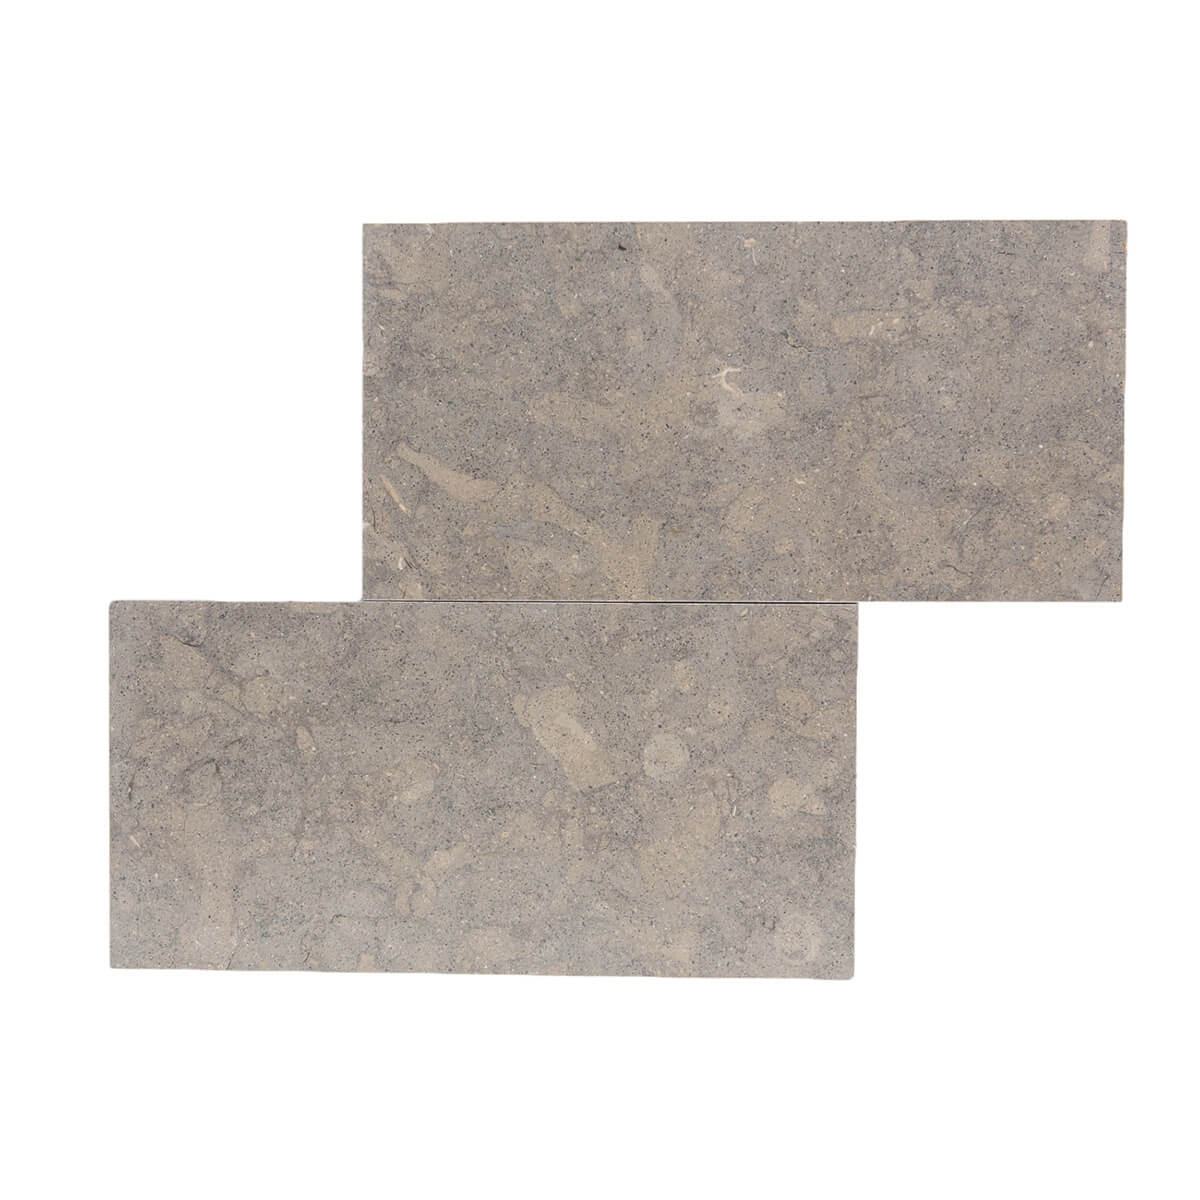 haussmann cote d azur limestone rectangle natural stone field tile 6x12 honed